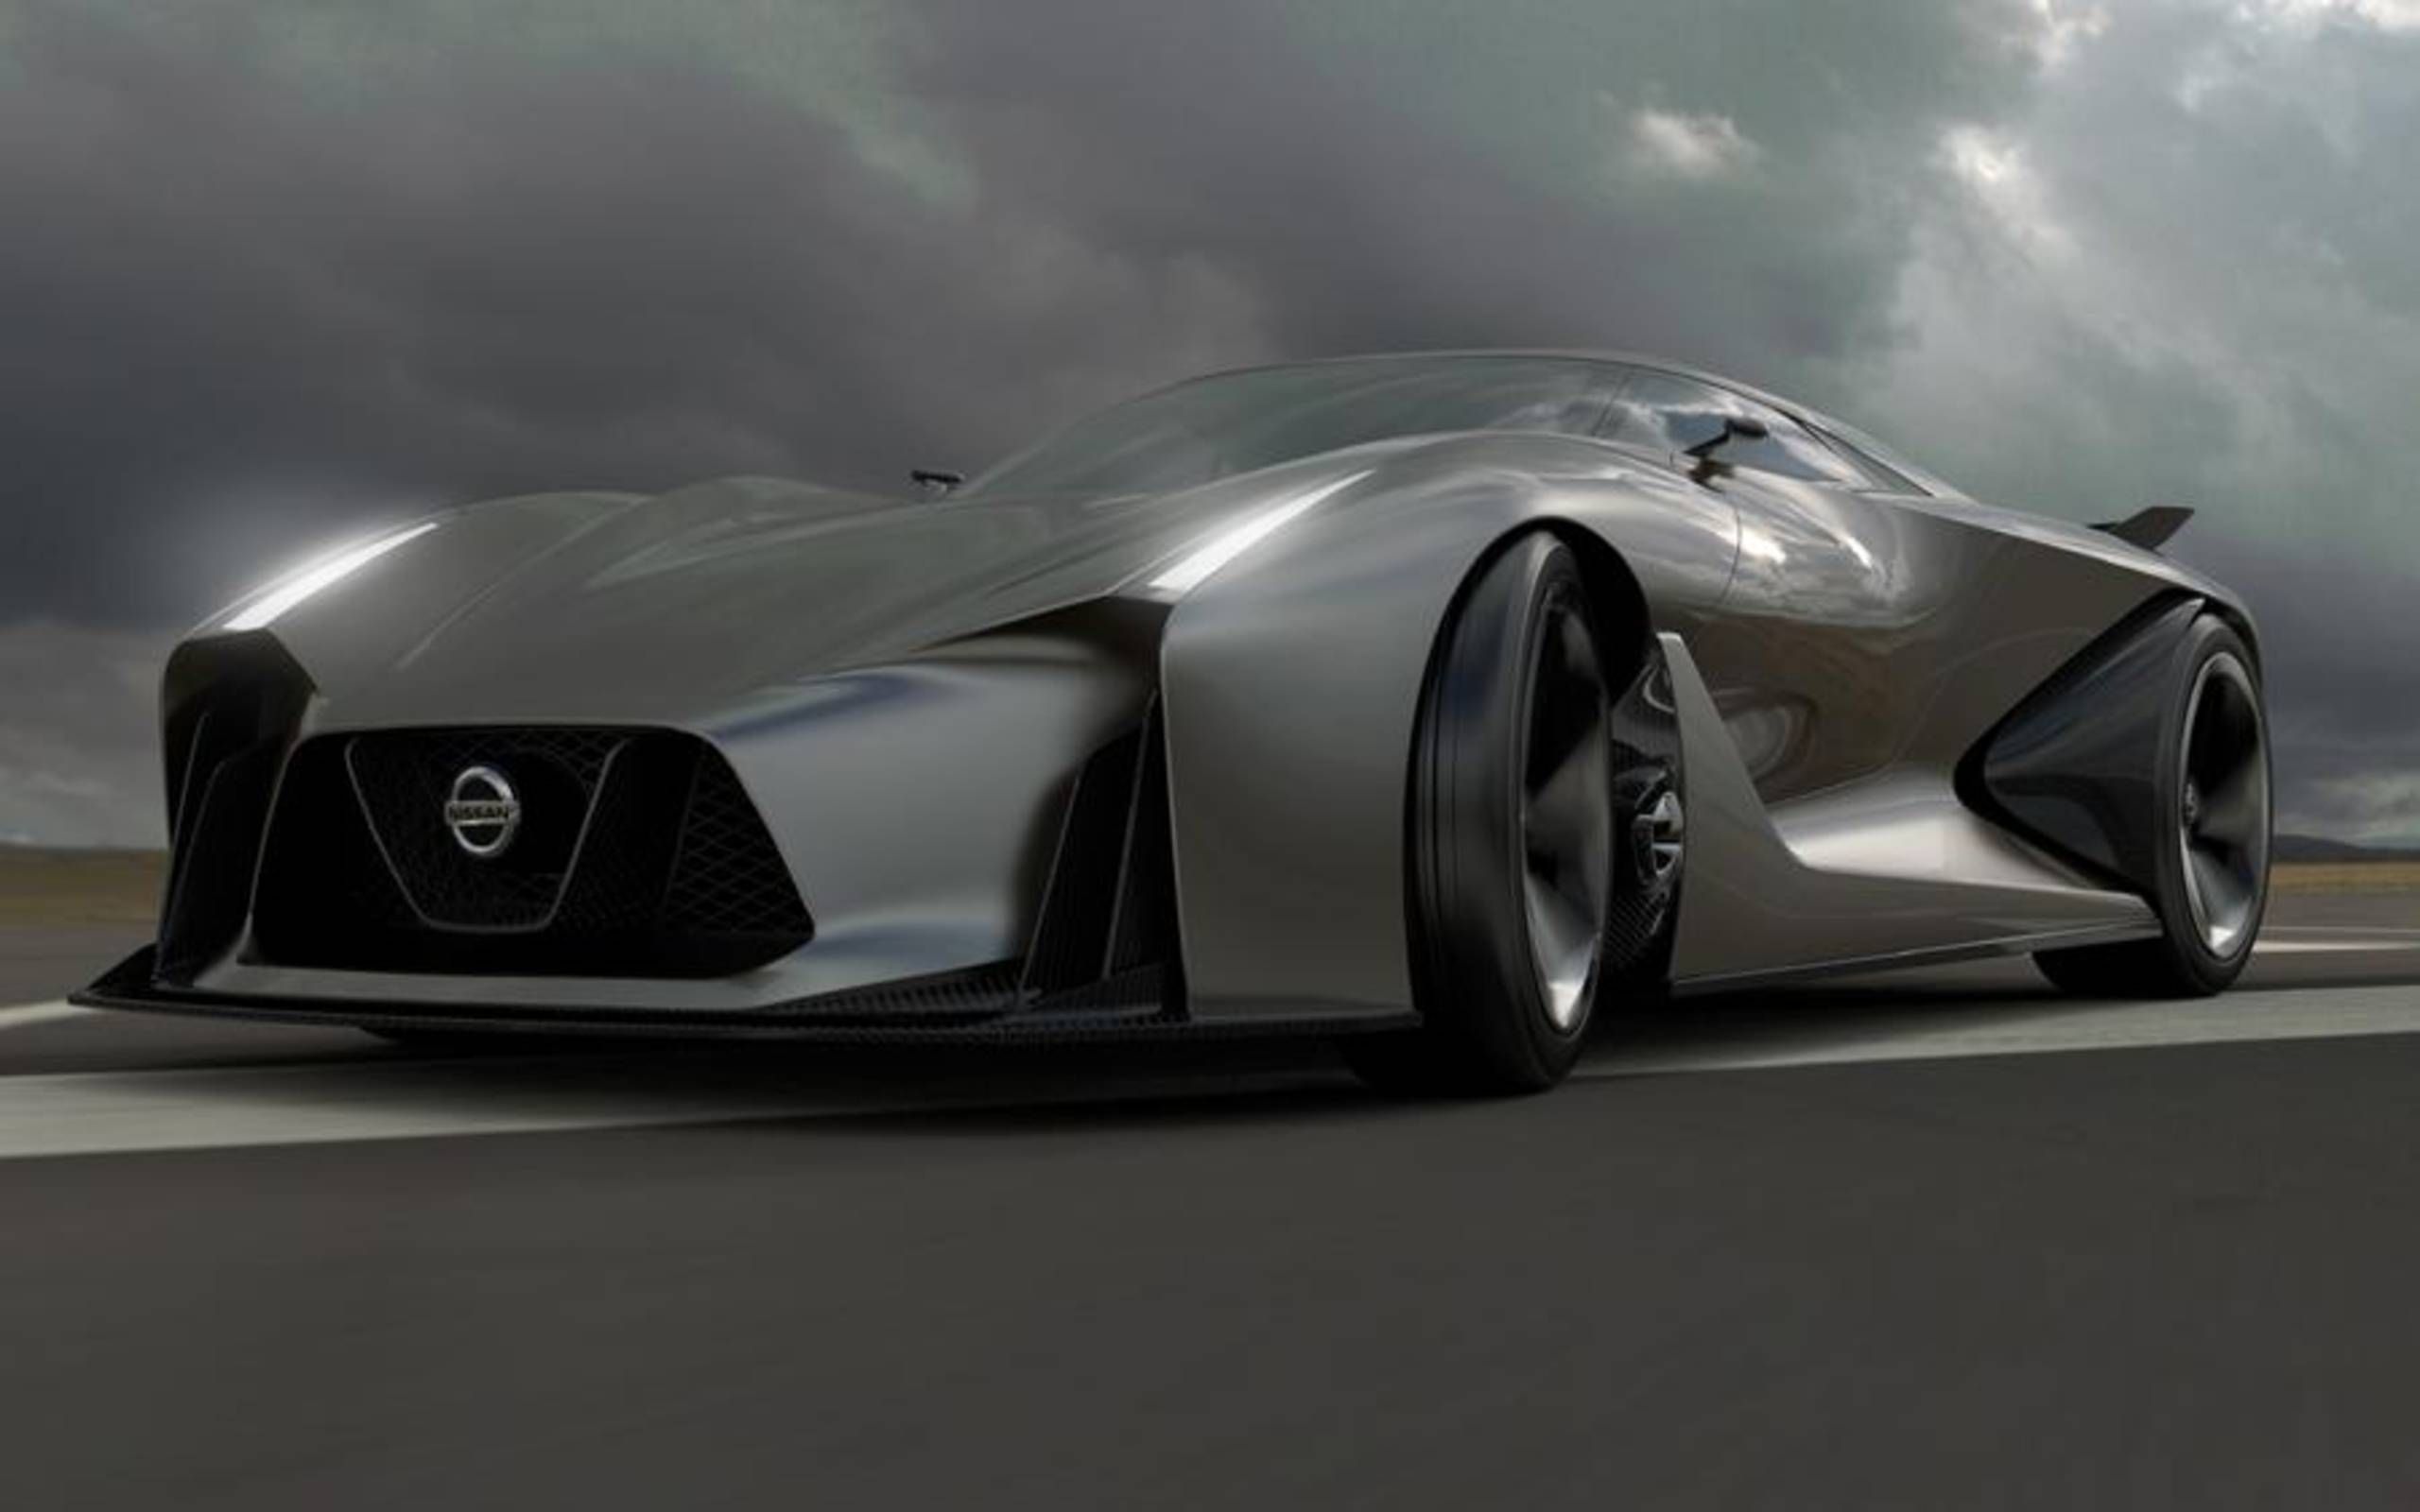 Nissan Concept Vision Gran Turismo